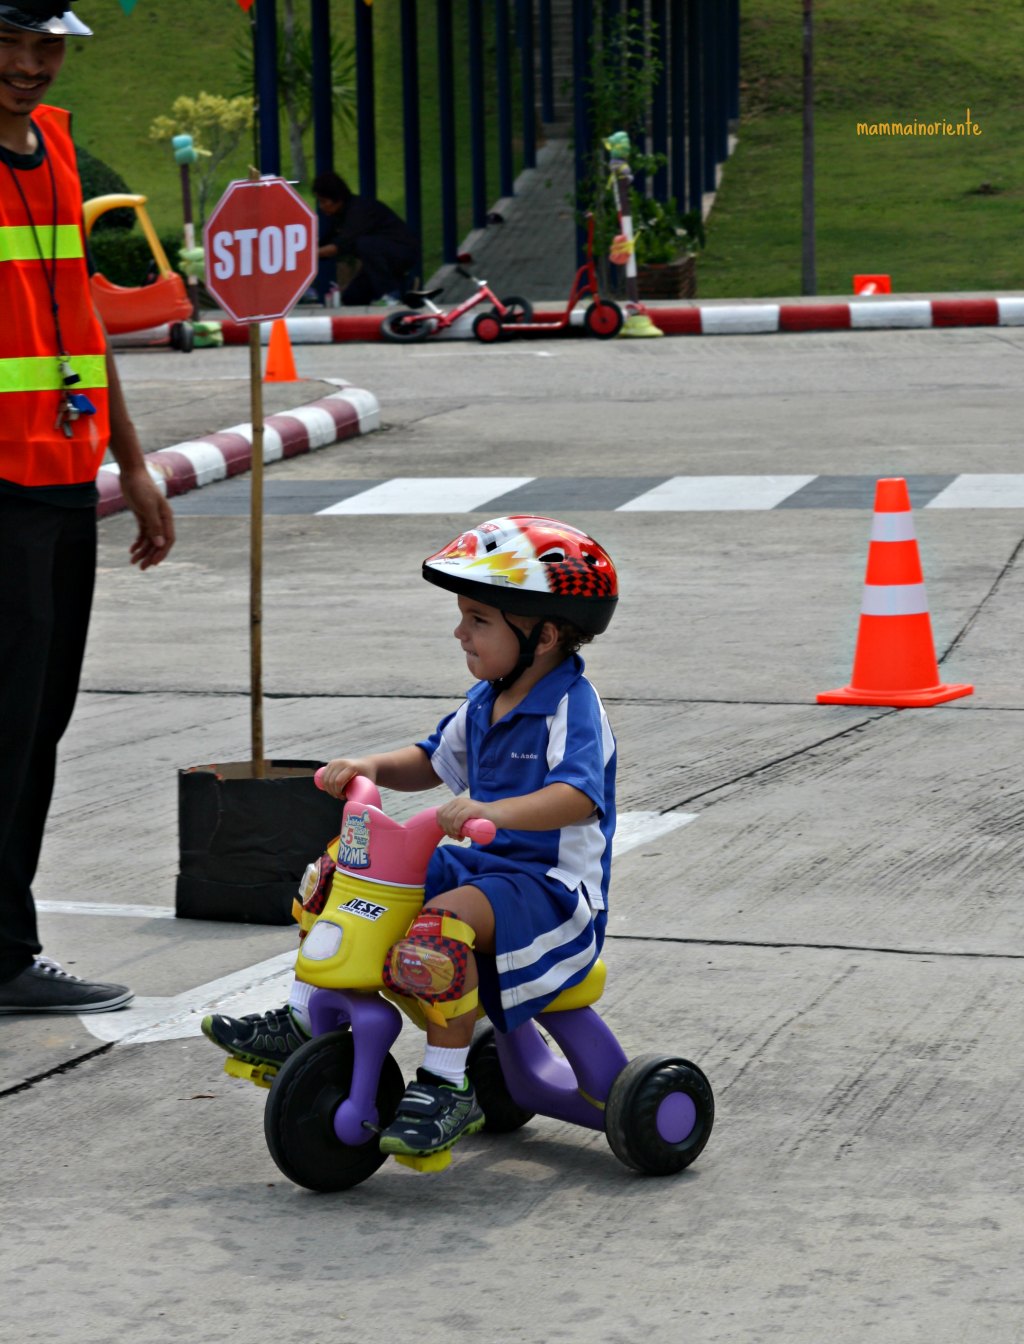 Wheels day: educazione stradale a scuola per bimbi 2-5 anni